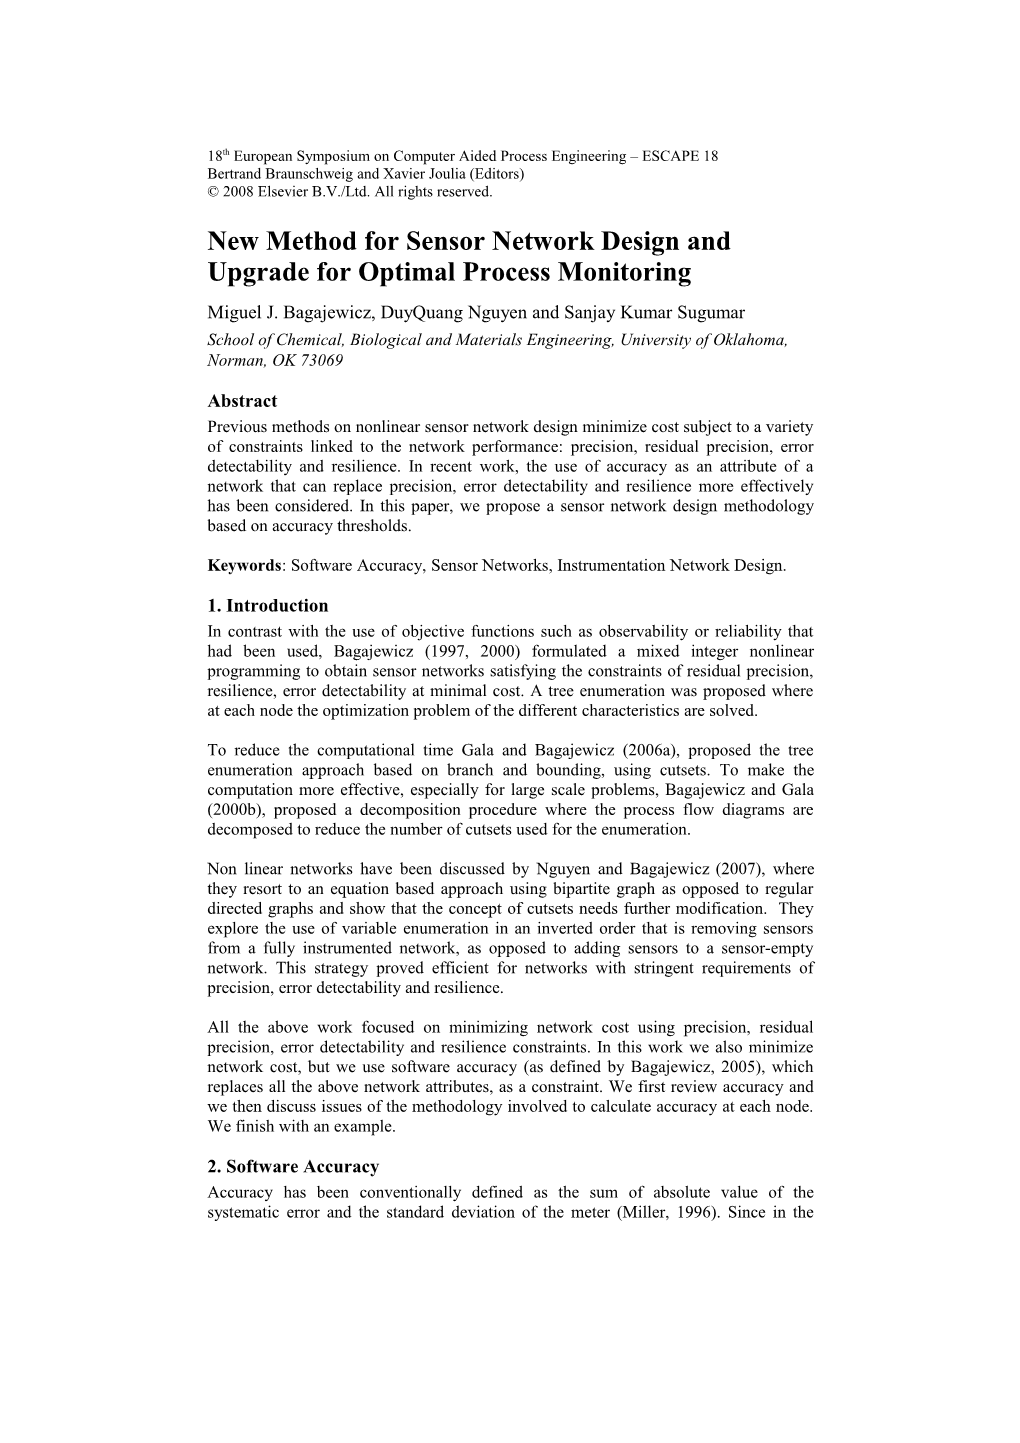 New Method for Nonlinear Sensor Network Design Bagajewicz Et Al